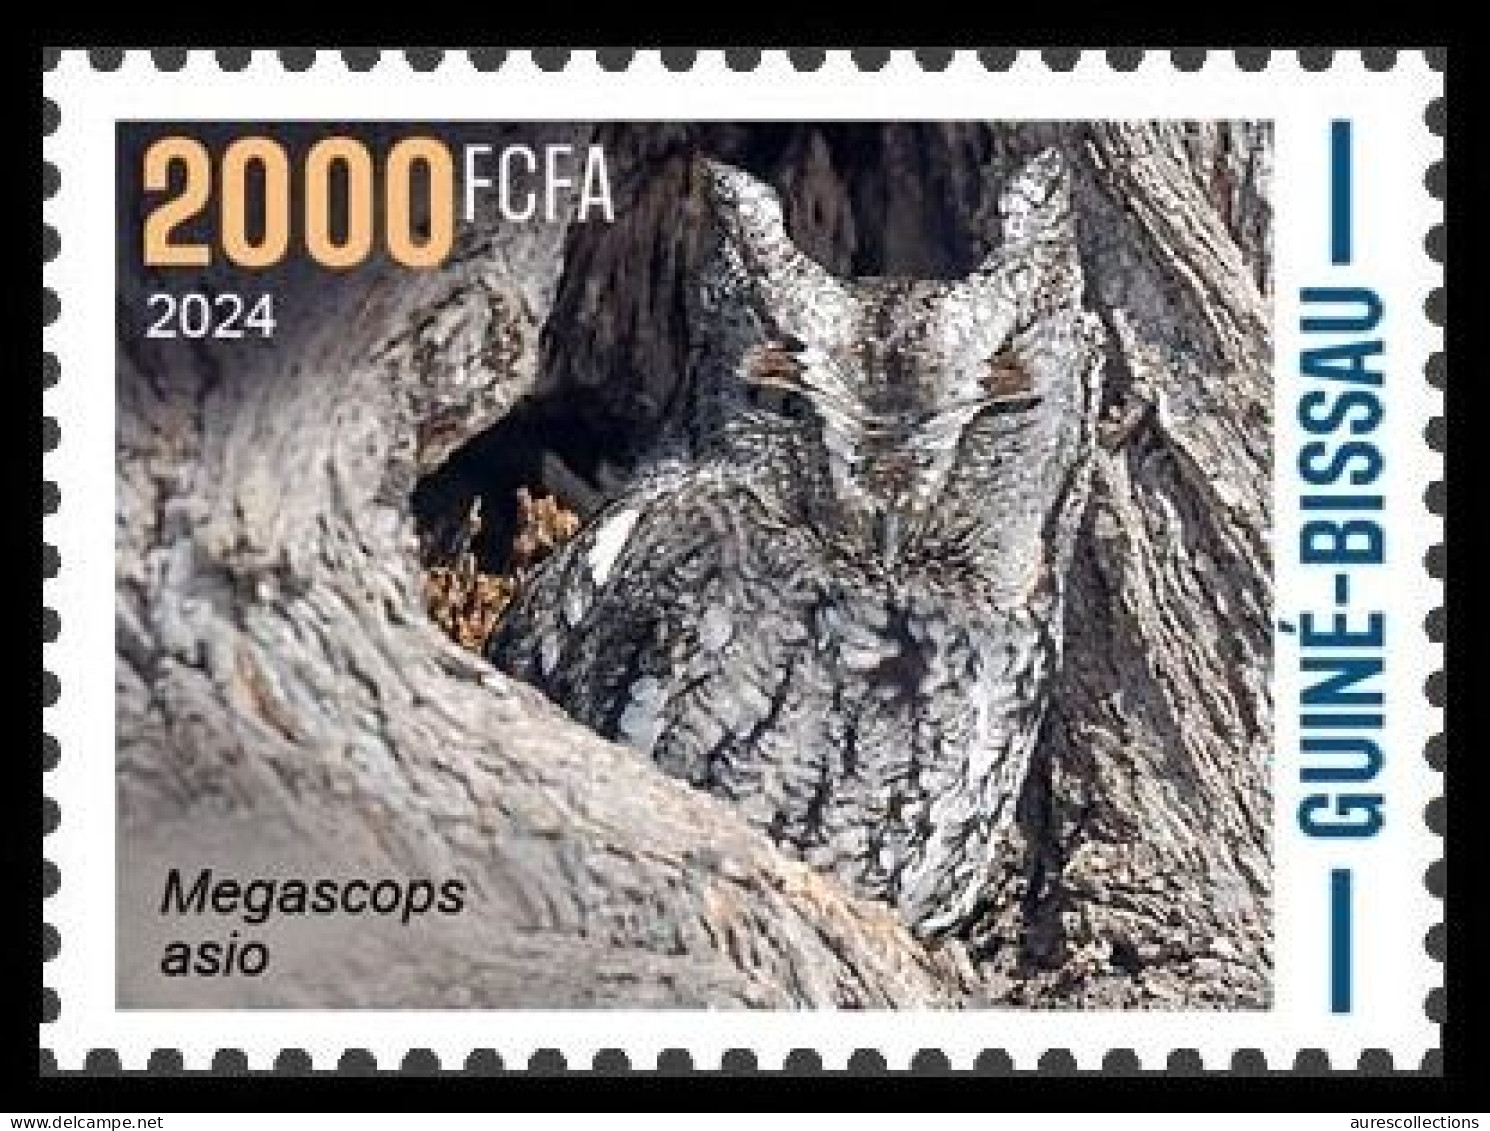 GUINEA BISSAU 2024 STAMP 1V - CAMOUFLAGE - OWLS OWL HIBOUX HIBOU BIRDS OISEAUX - MNH - Hiboux & Chouettes